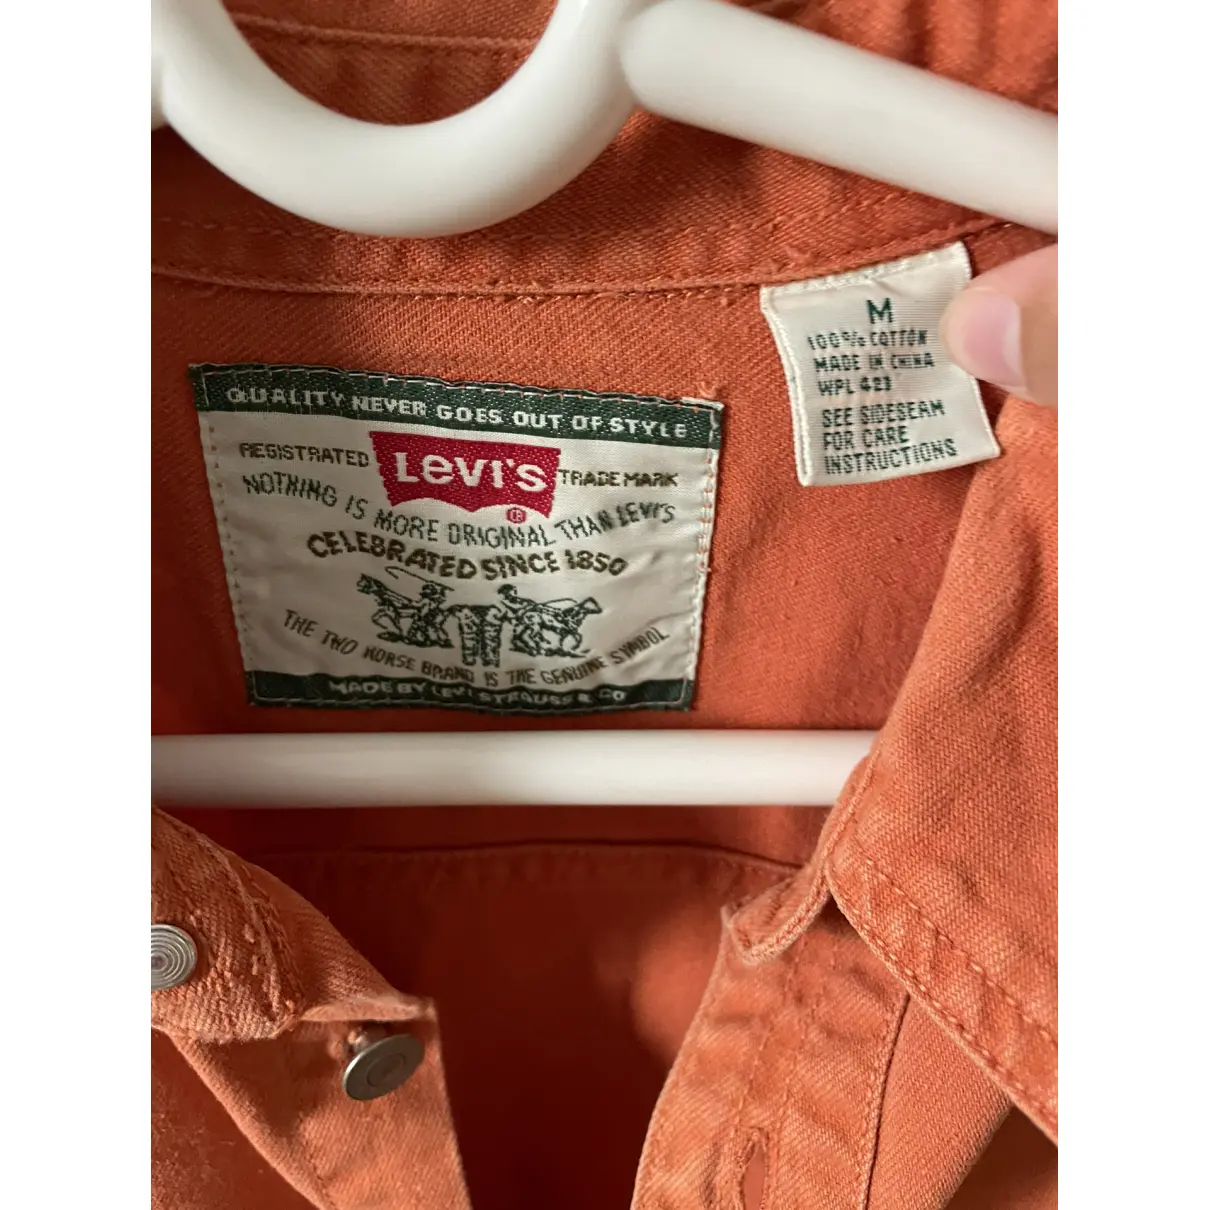 Buy Levi's Shirt online - Vintage